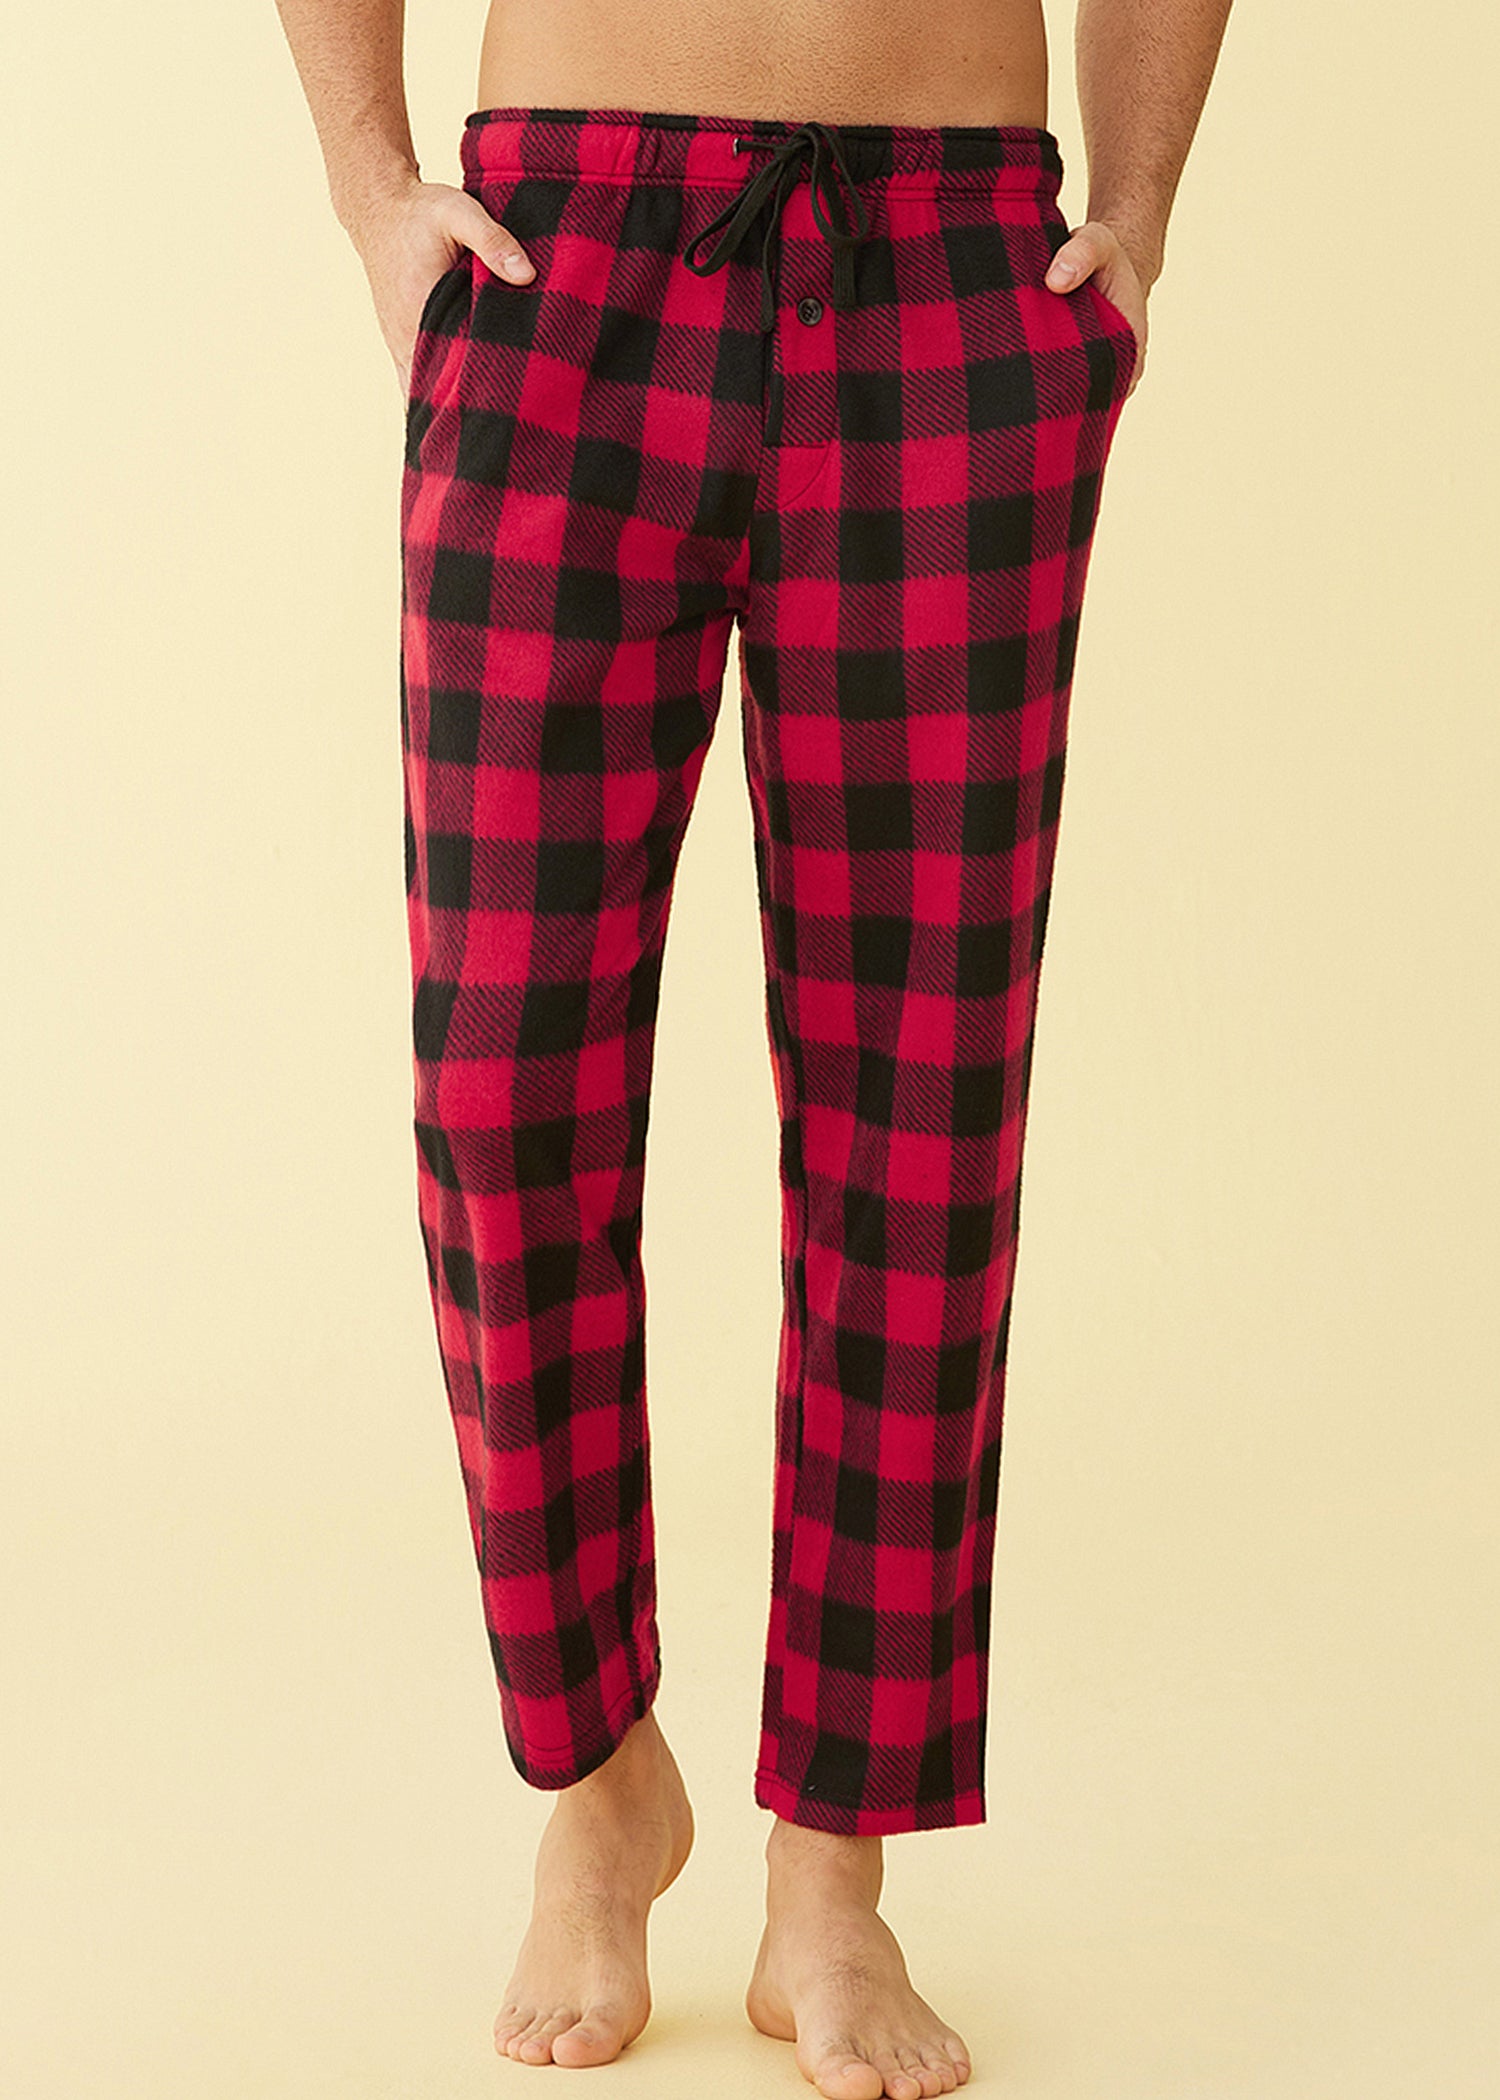 Women's Cotton Flannel Pajama Pants Plaid Pj Bottoms with Pockets – Latuza